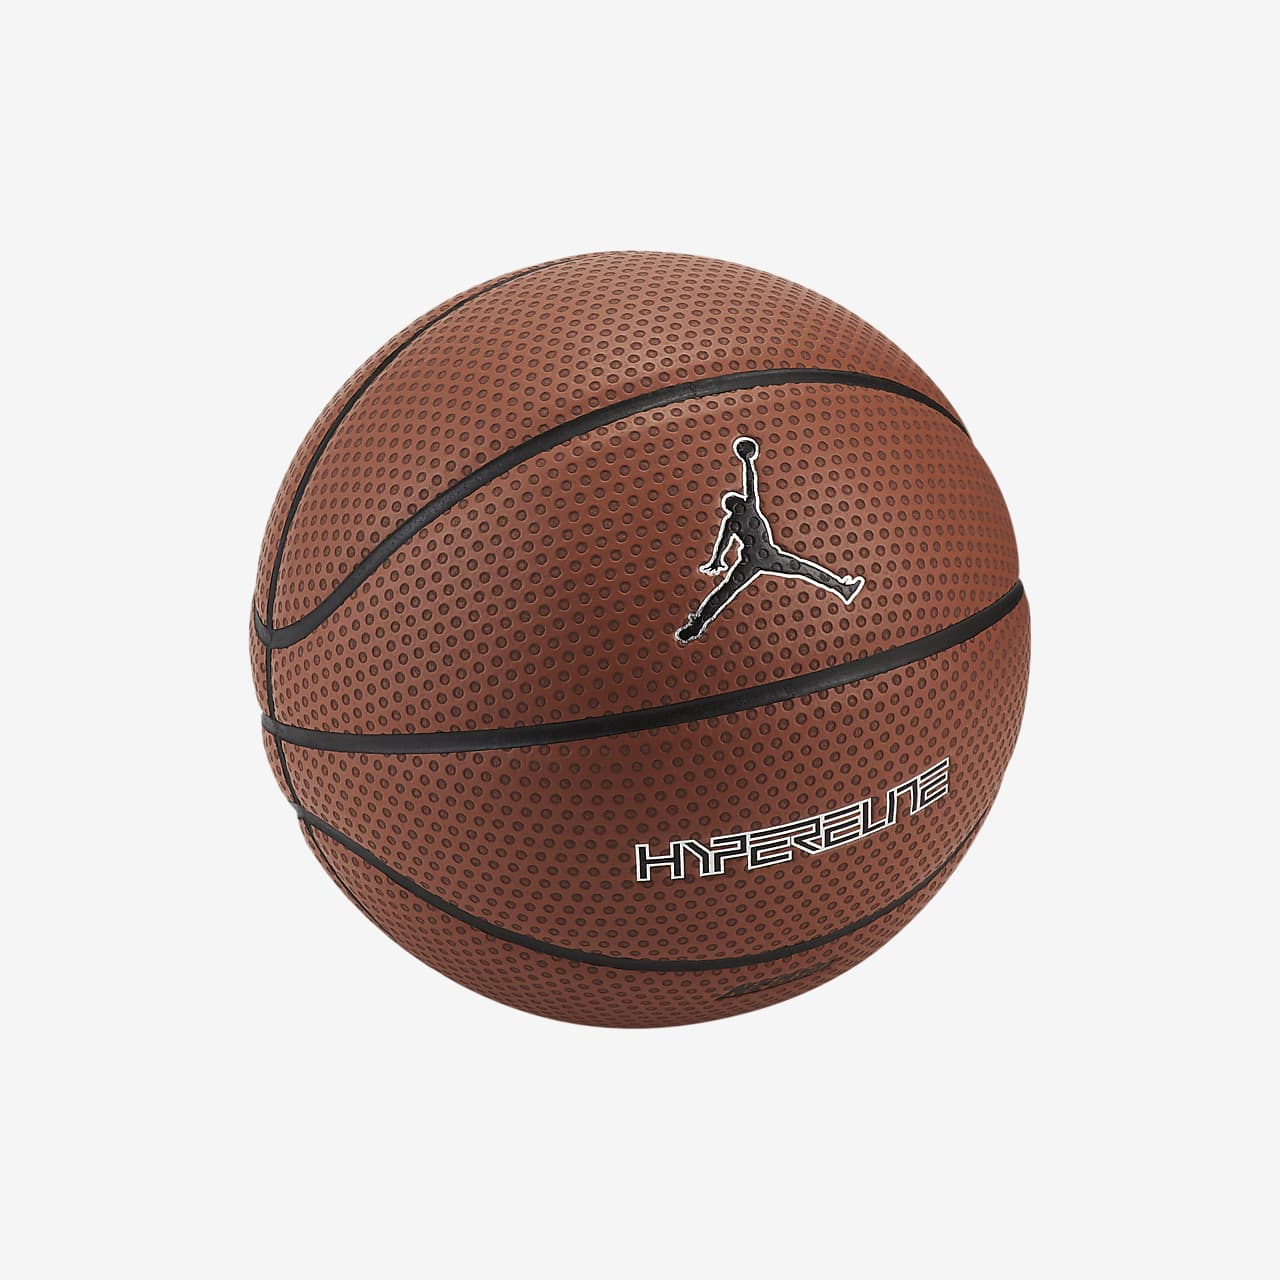 jordan basketball ball size 7